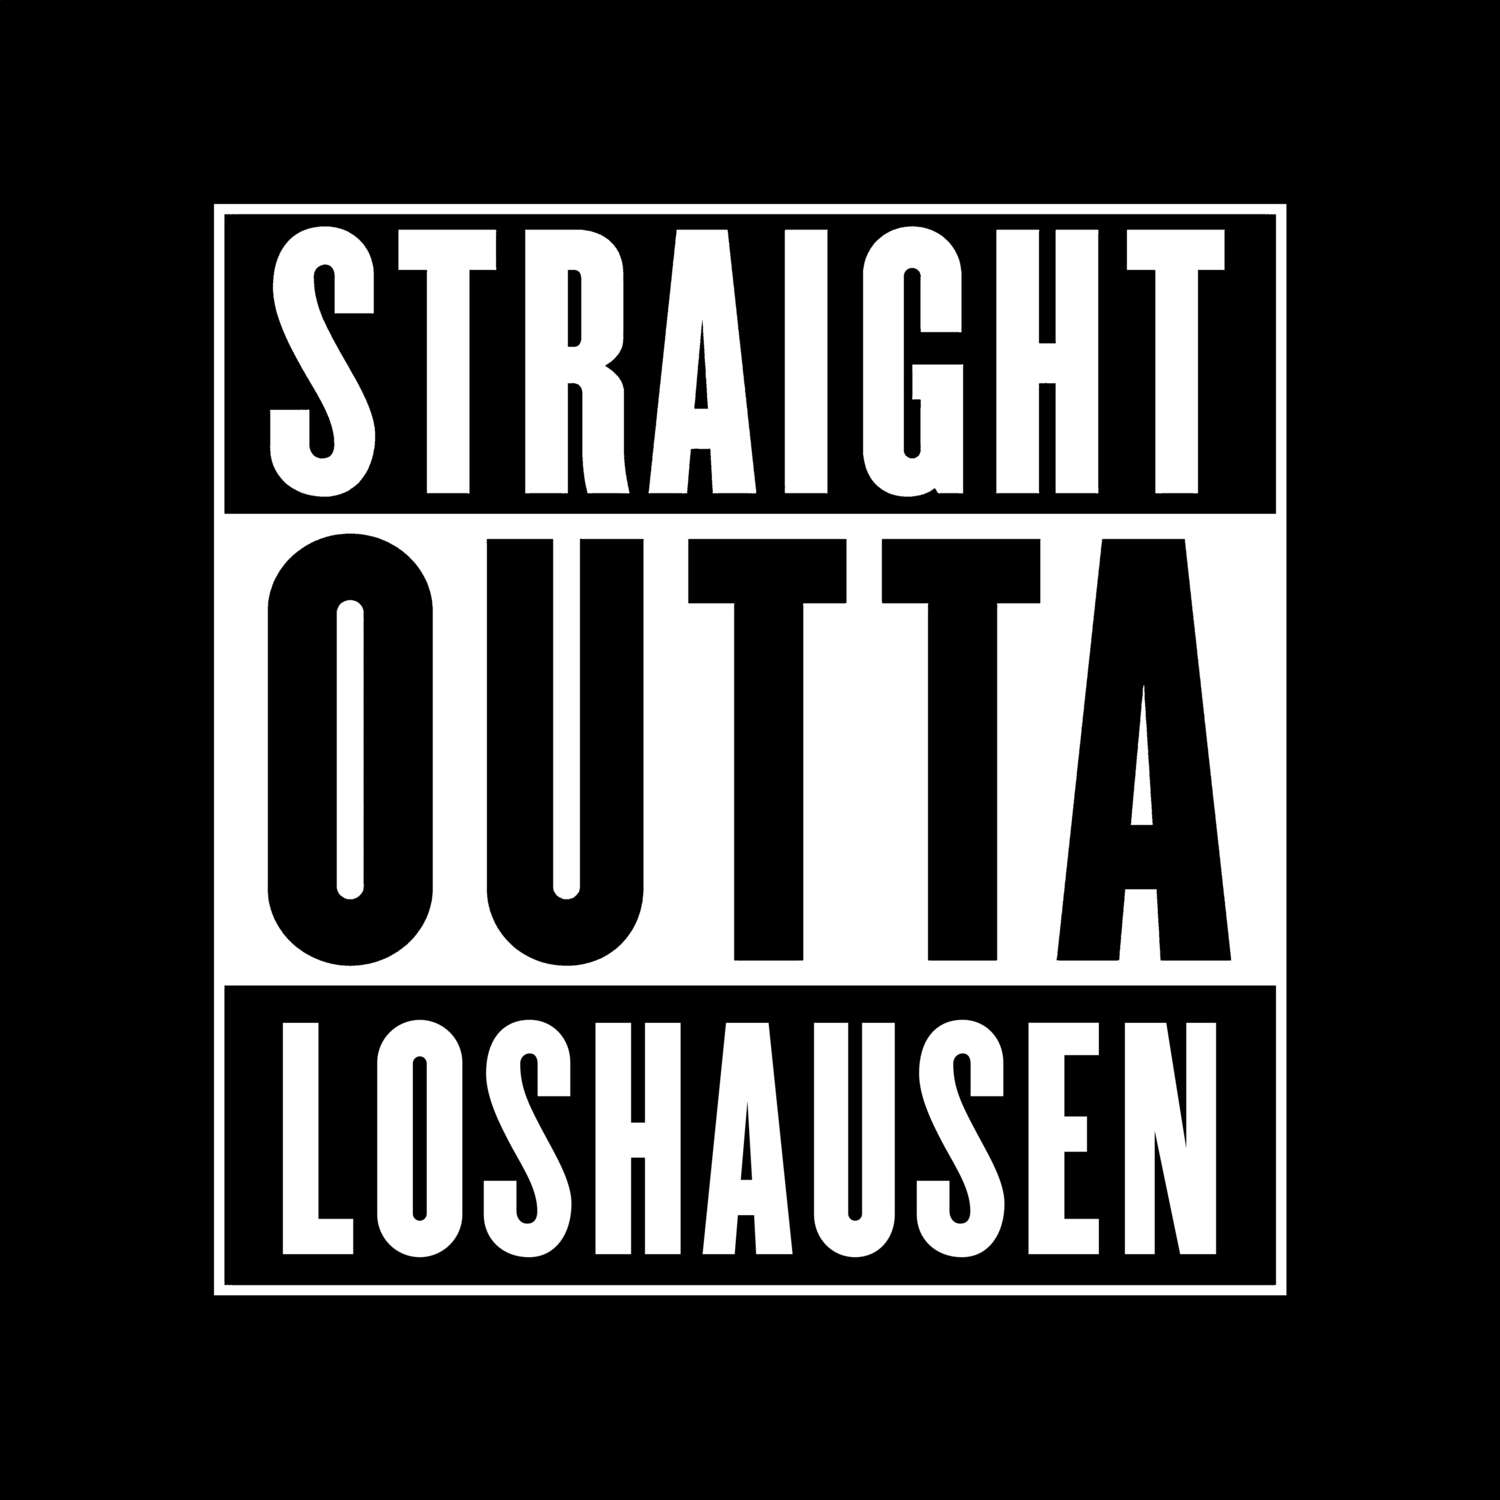 Loshausen T-Shirt »Straight Outta«